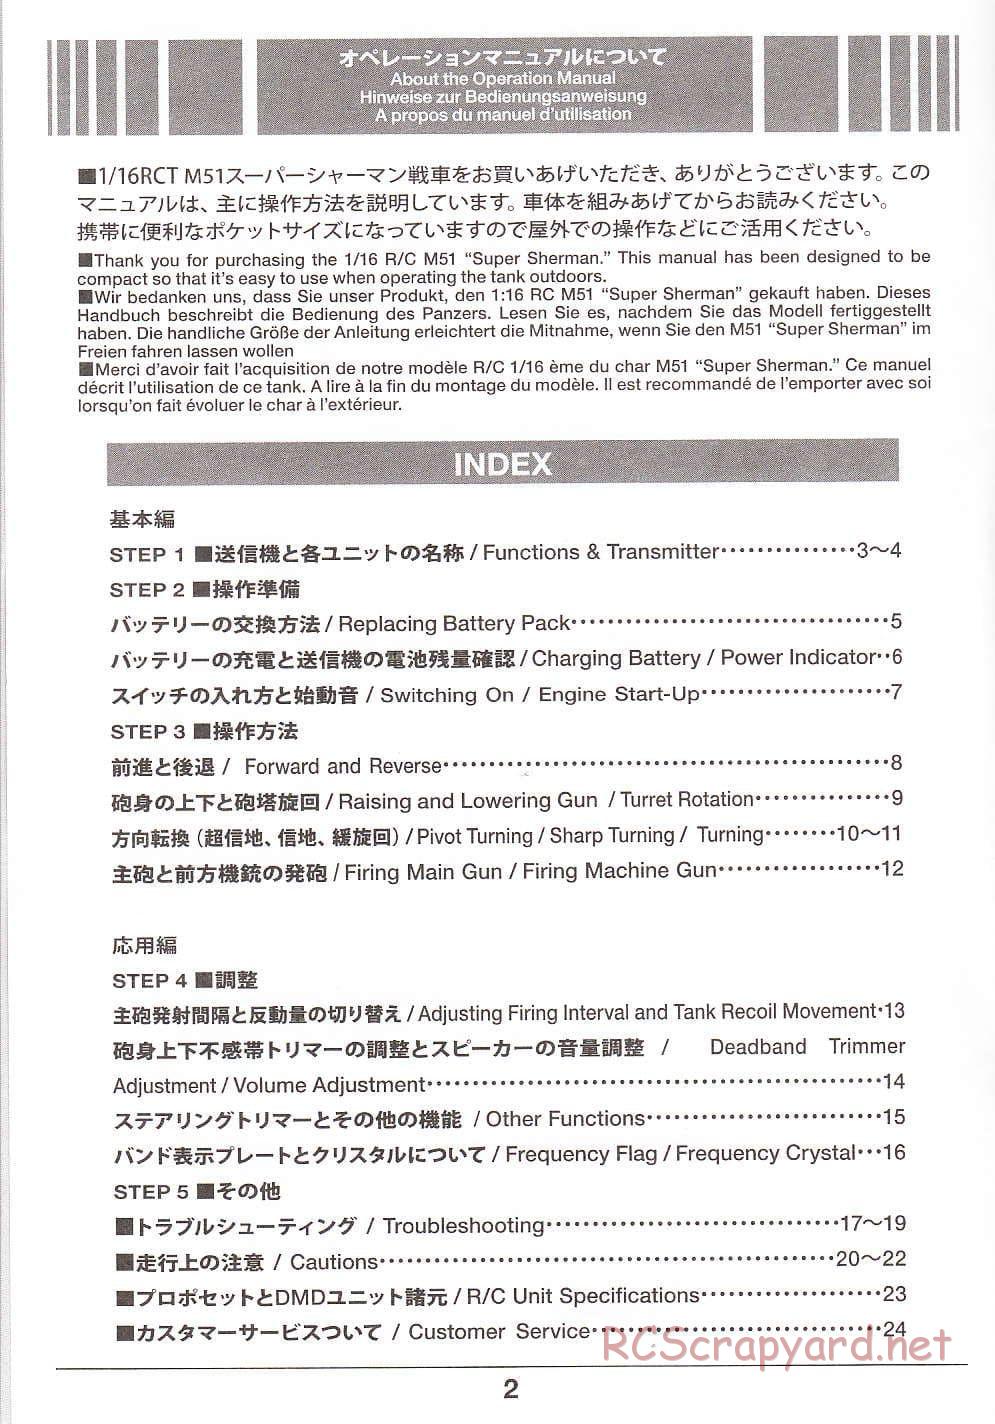 Tamiya - Super Sherman M-51 - 1/16 Scale Chassis - Operation Manual - Page 2